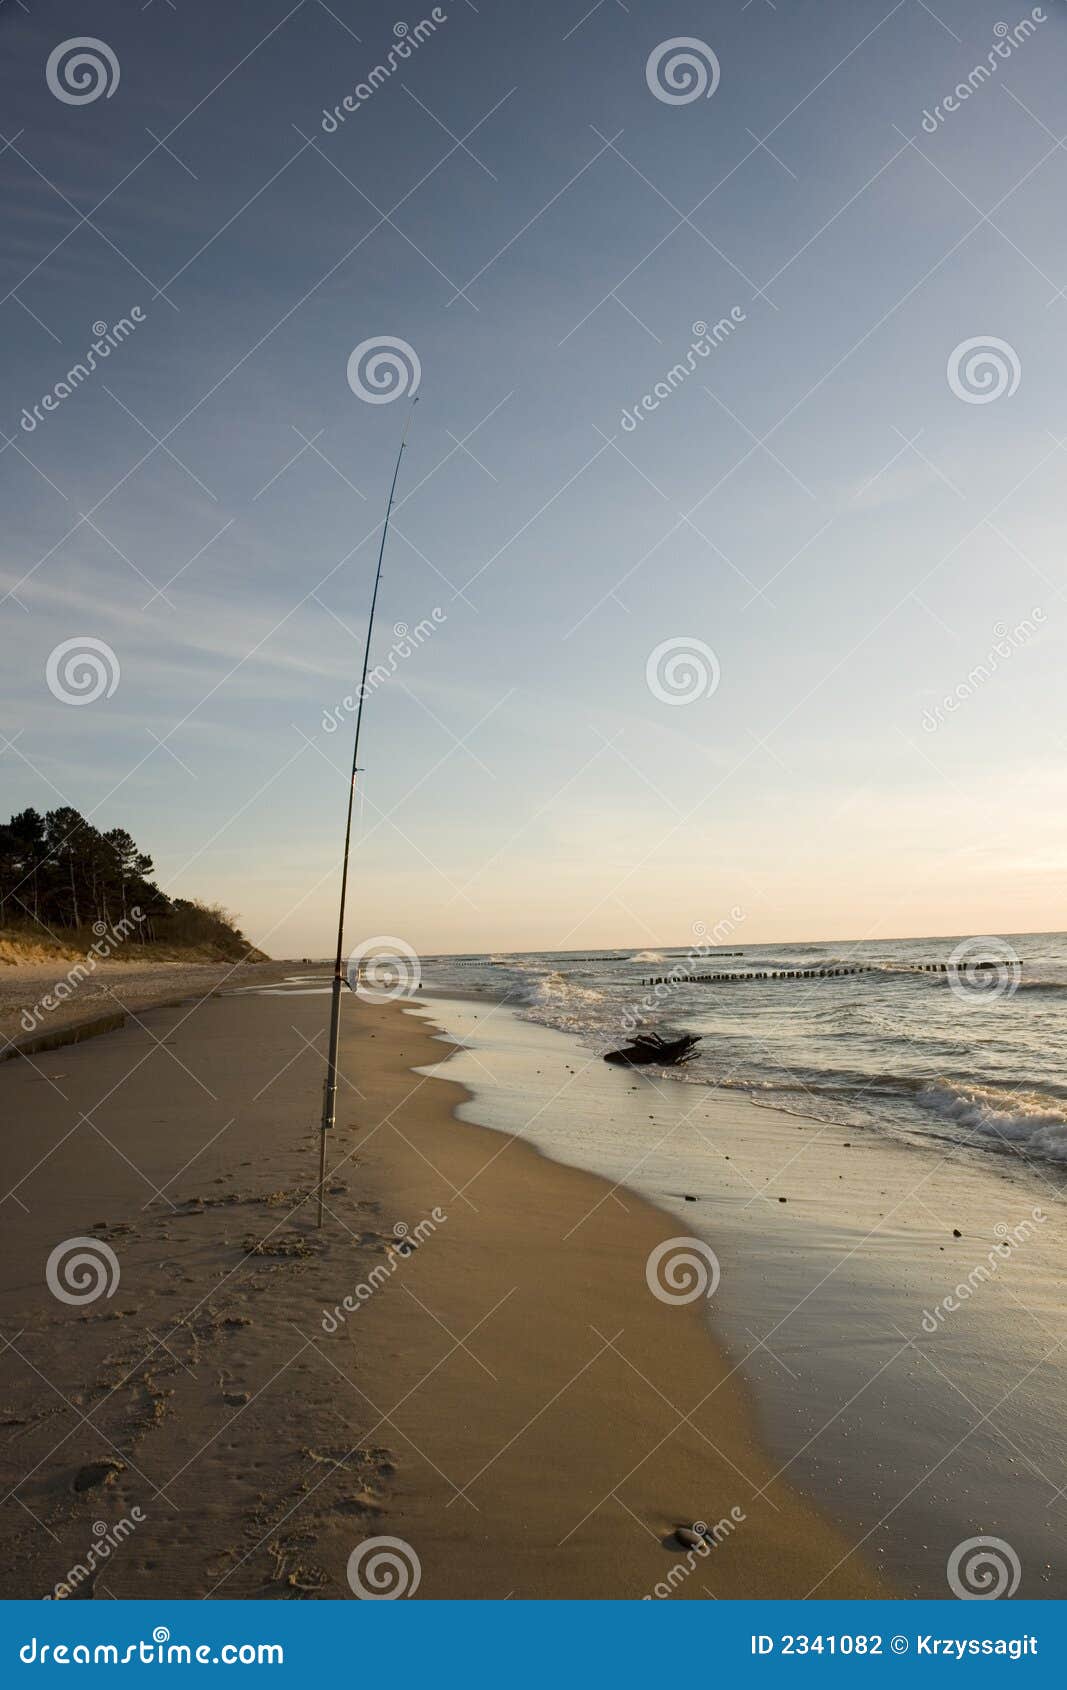 https://thumbs.dreamstime.com/z/fishing-pole-sand-beach-2341082.jpg